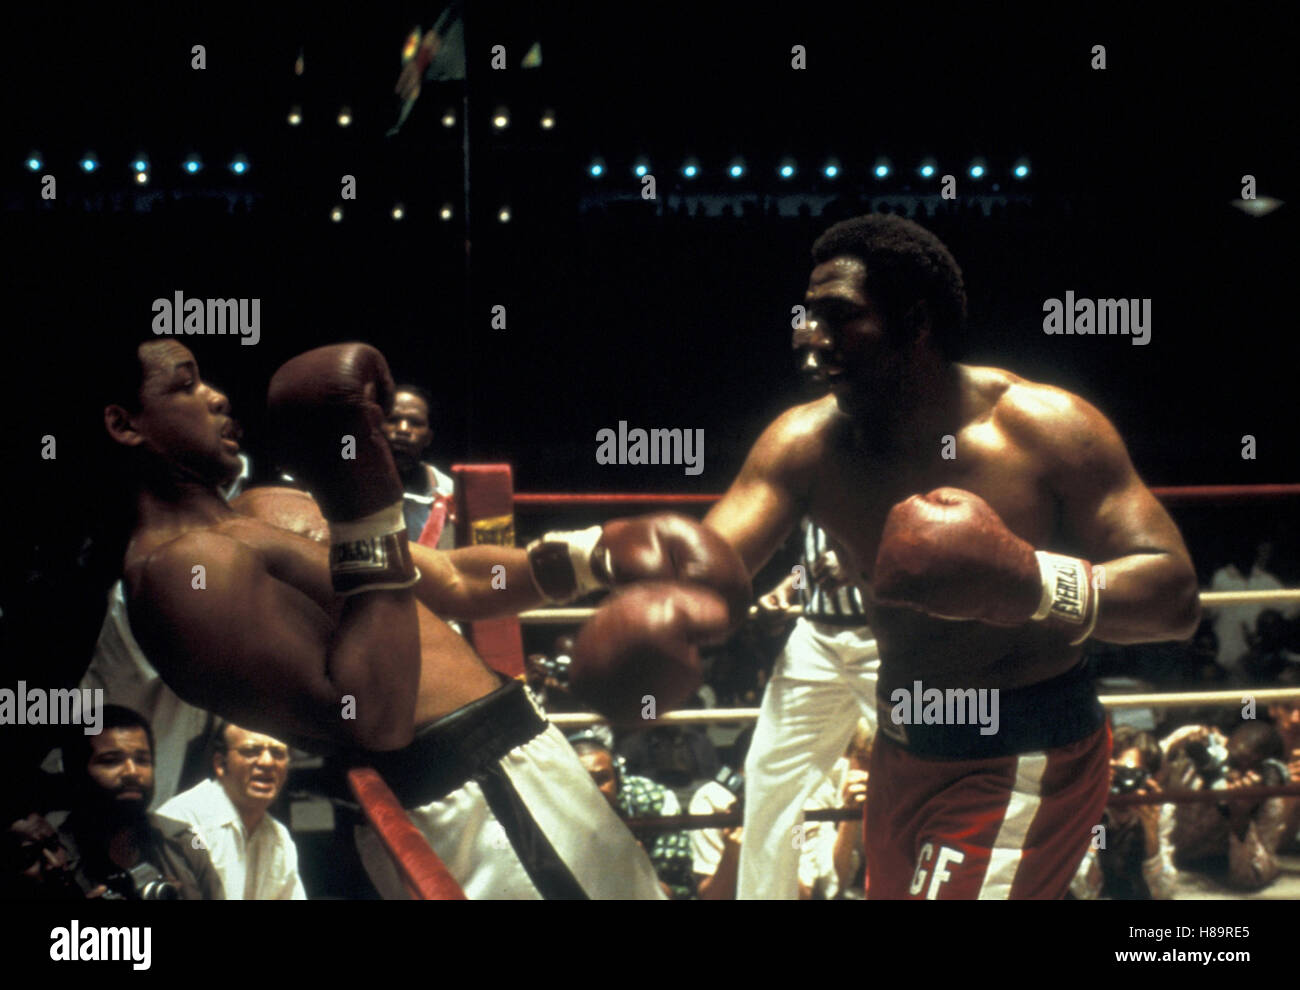 Ali, (ALI) USA 2001, Regie: Michael Mann, WILL SMITH, CHARLES SHUFFORD (Muhammad Ali / George Foreman) Stichwort: Boxring, Boxkampf, Boxer, Voxhandschuhe Stock Photo